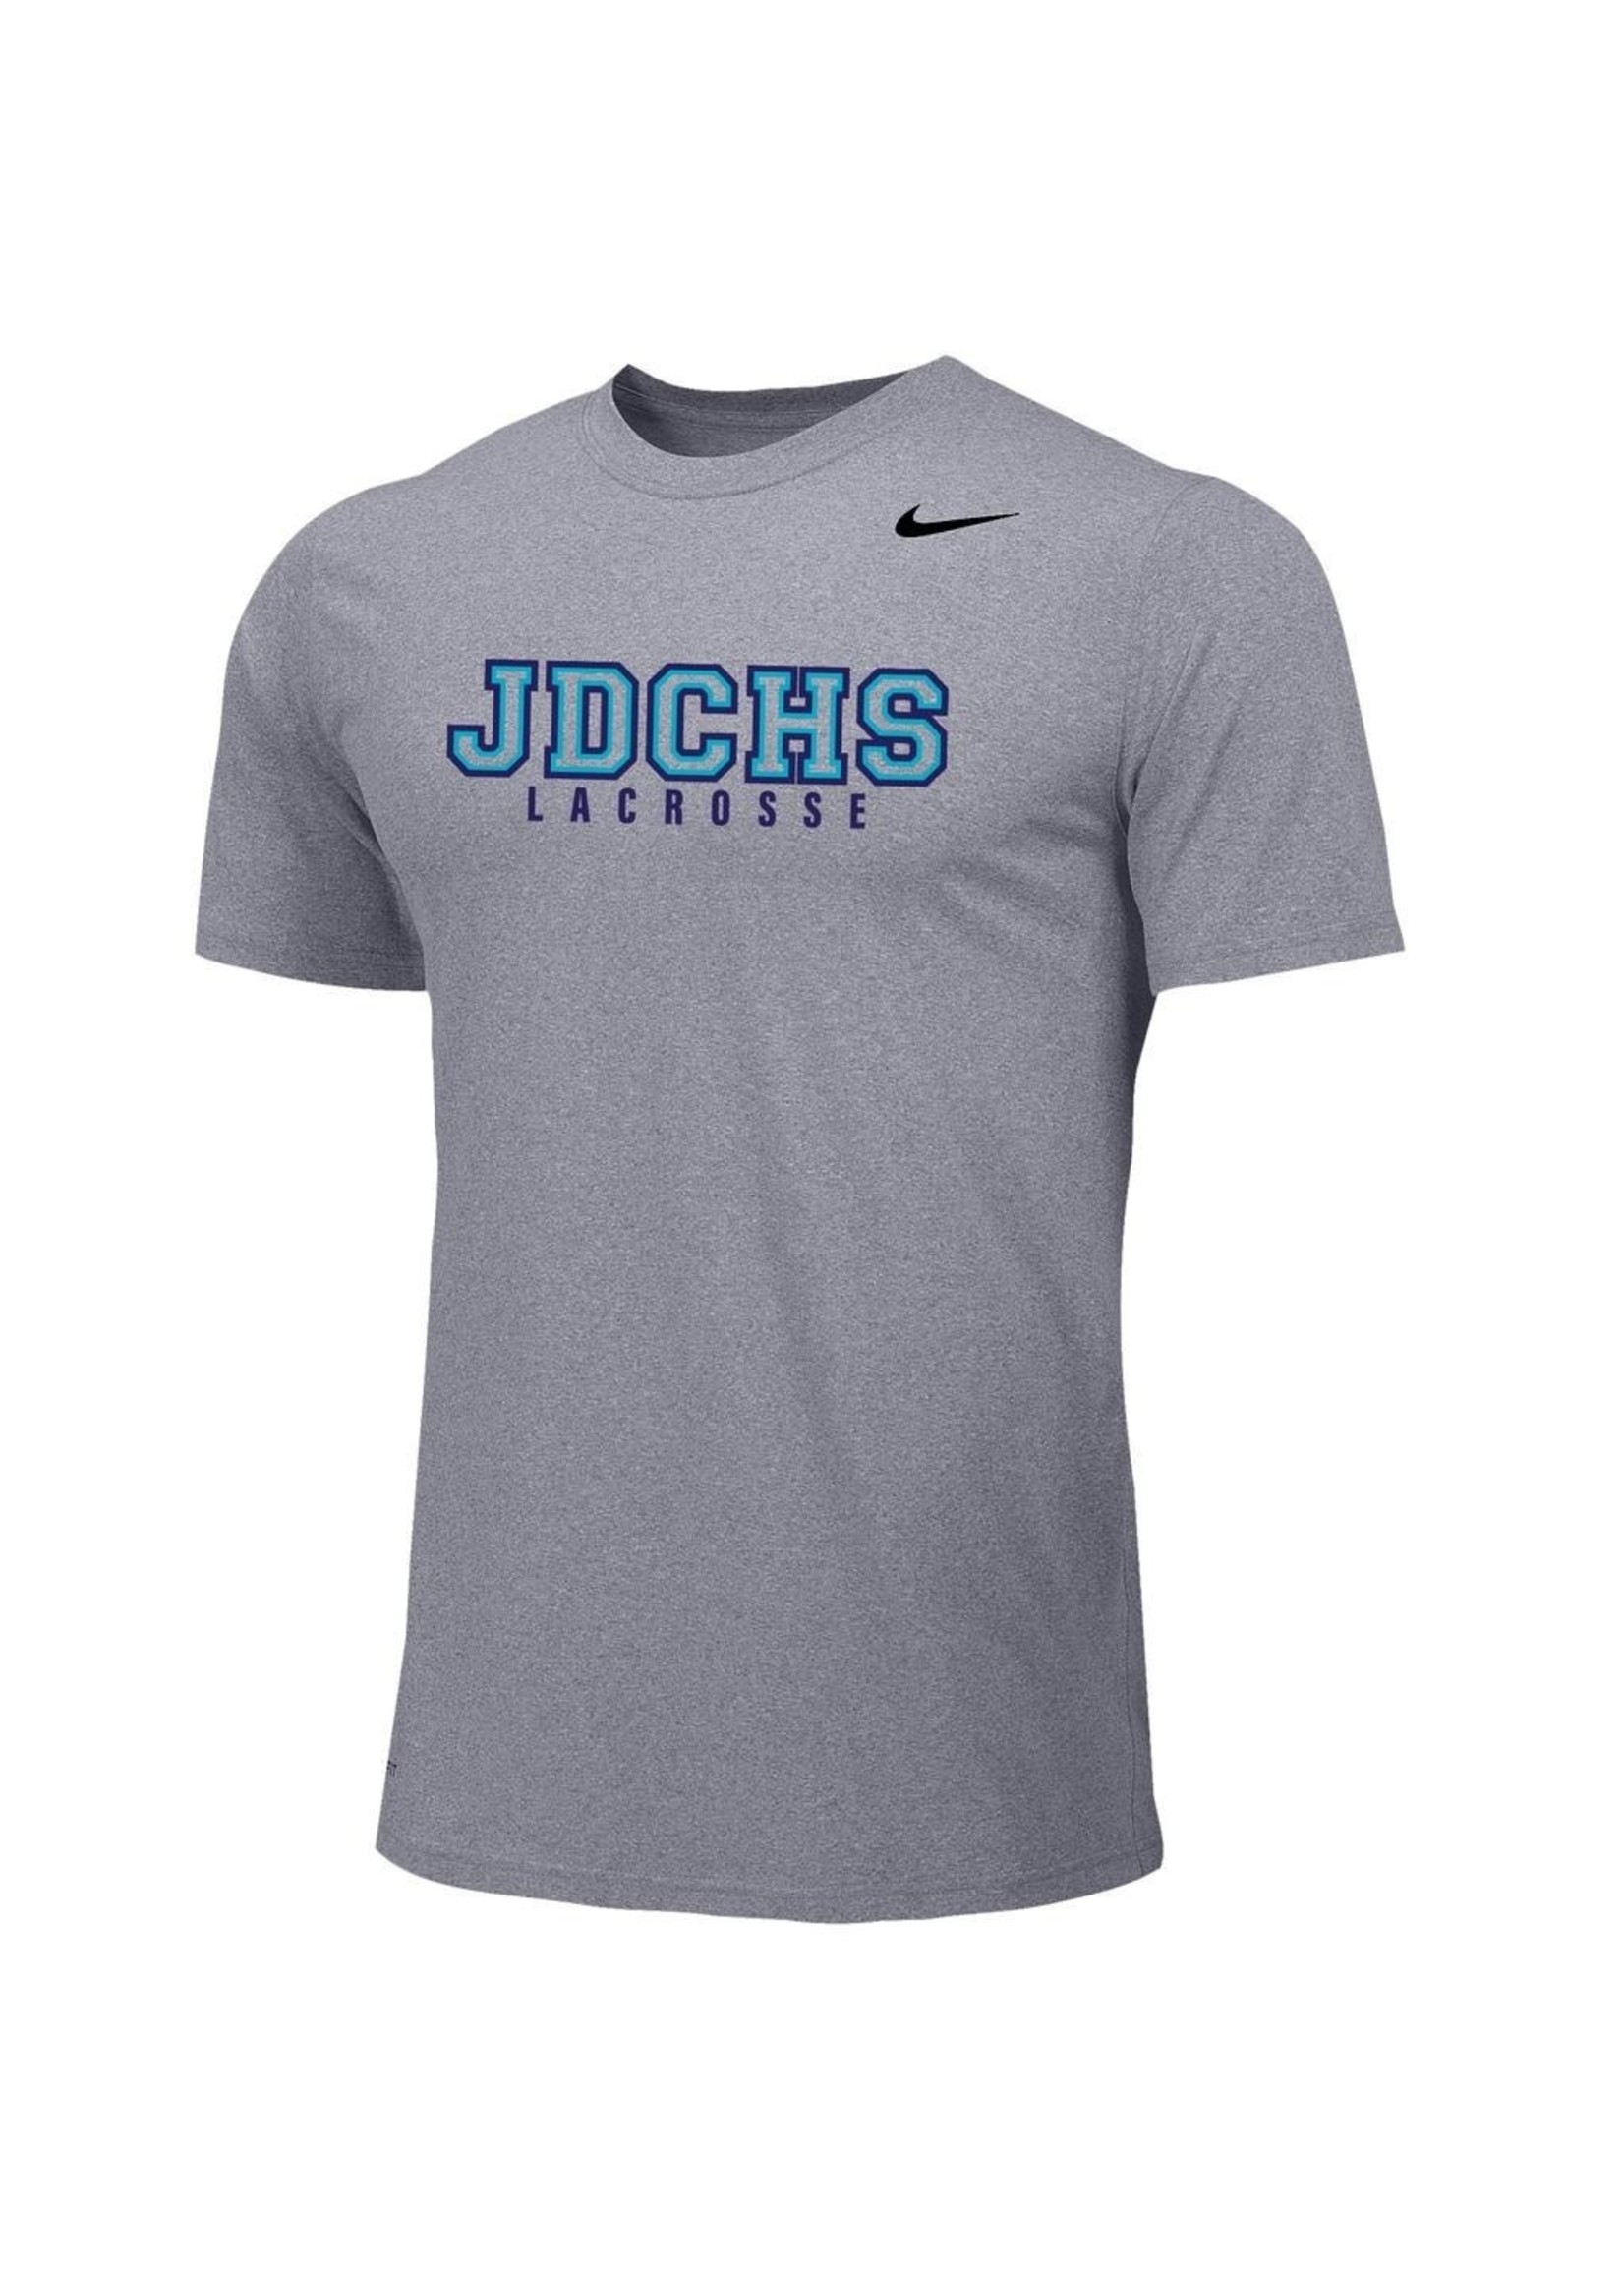 NON-UNIFORM Lacrosse - JD Lacrosse Nike Short Sleeve Shirt, Unisex